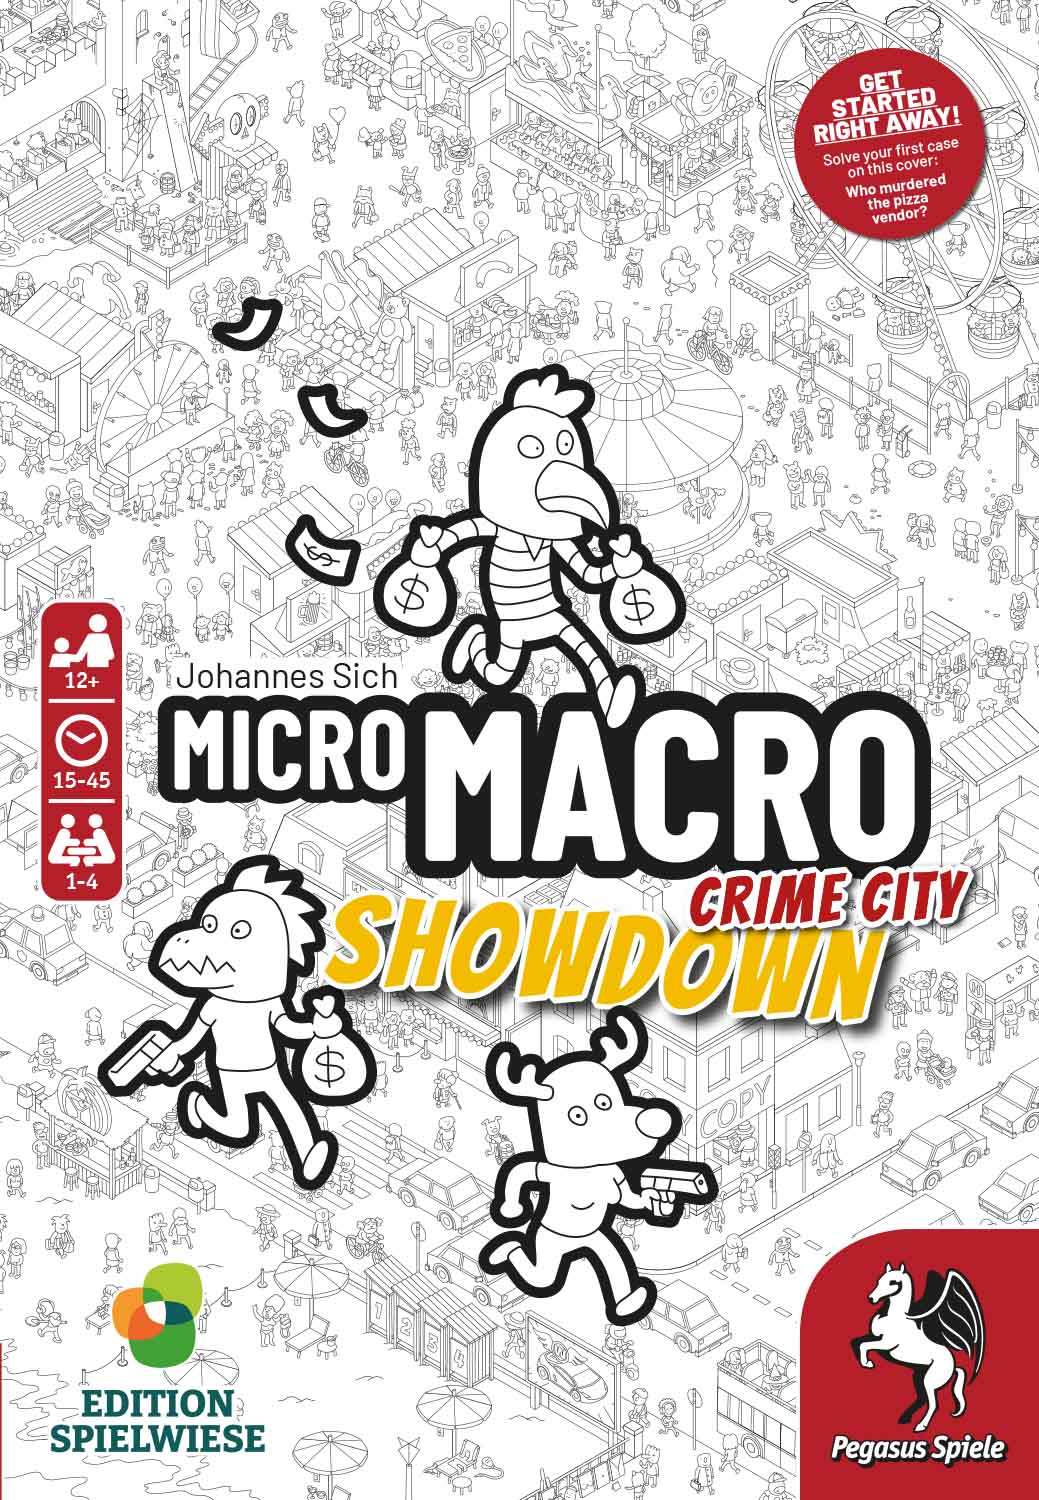 MicroMacro: Crime City 4 Showdown -  Pegasus Spiele